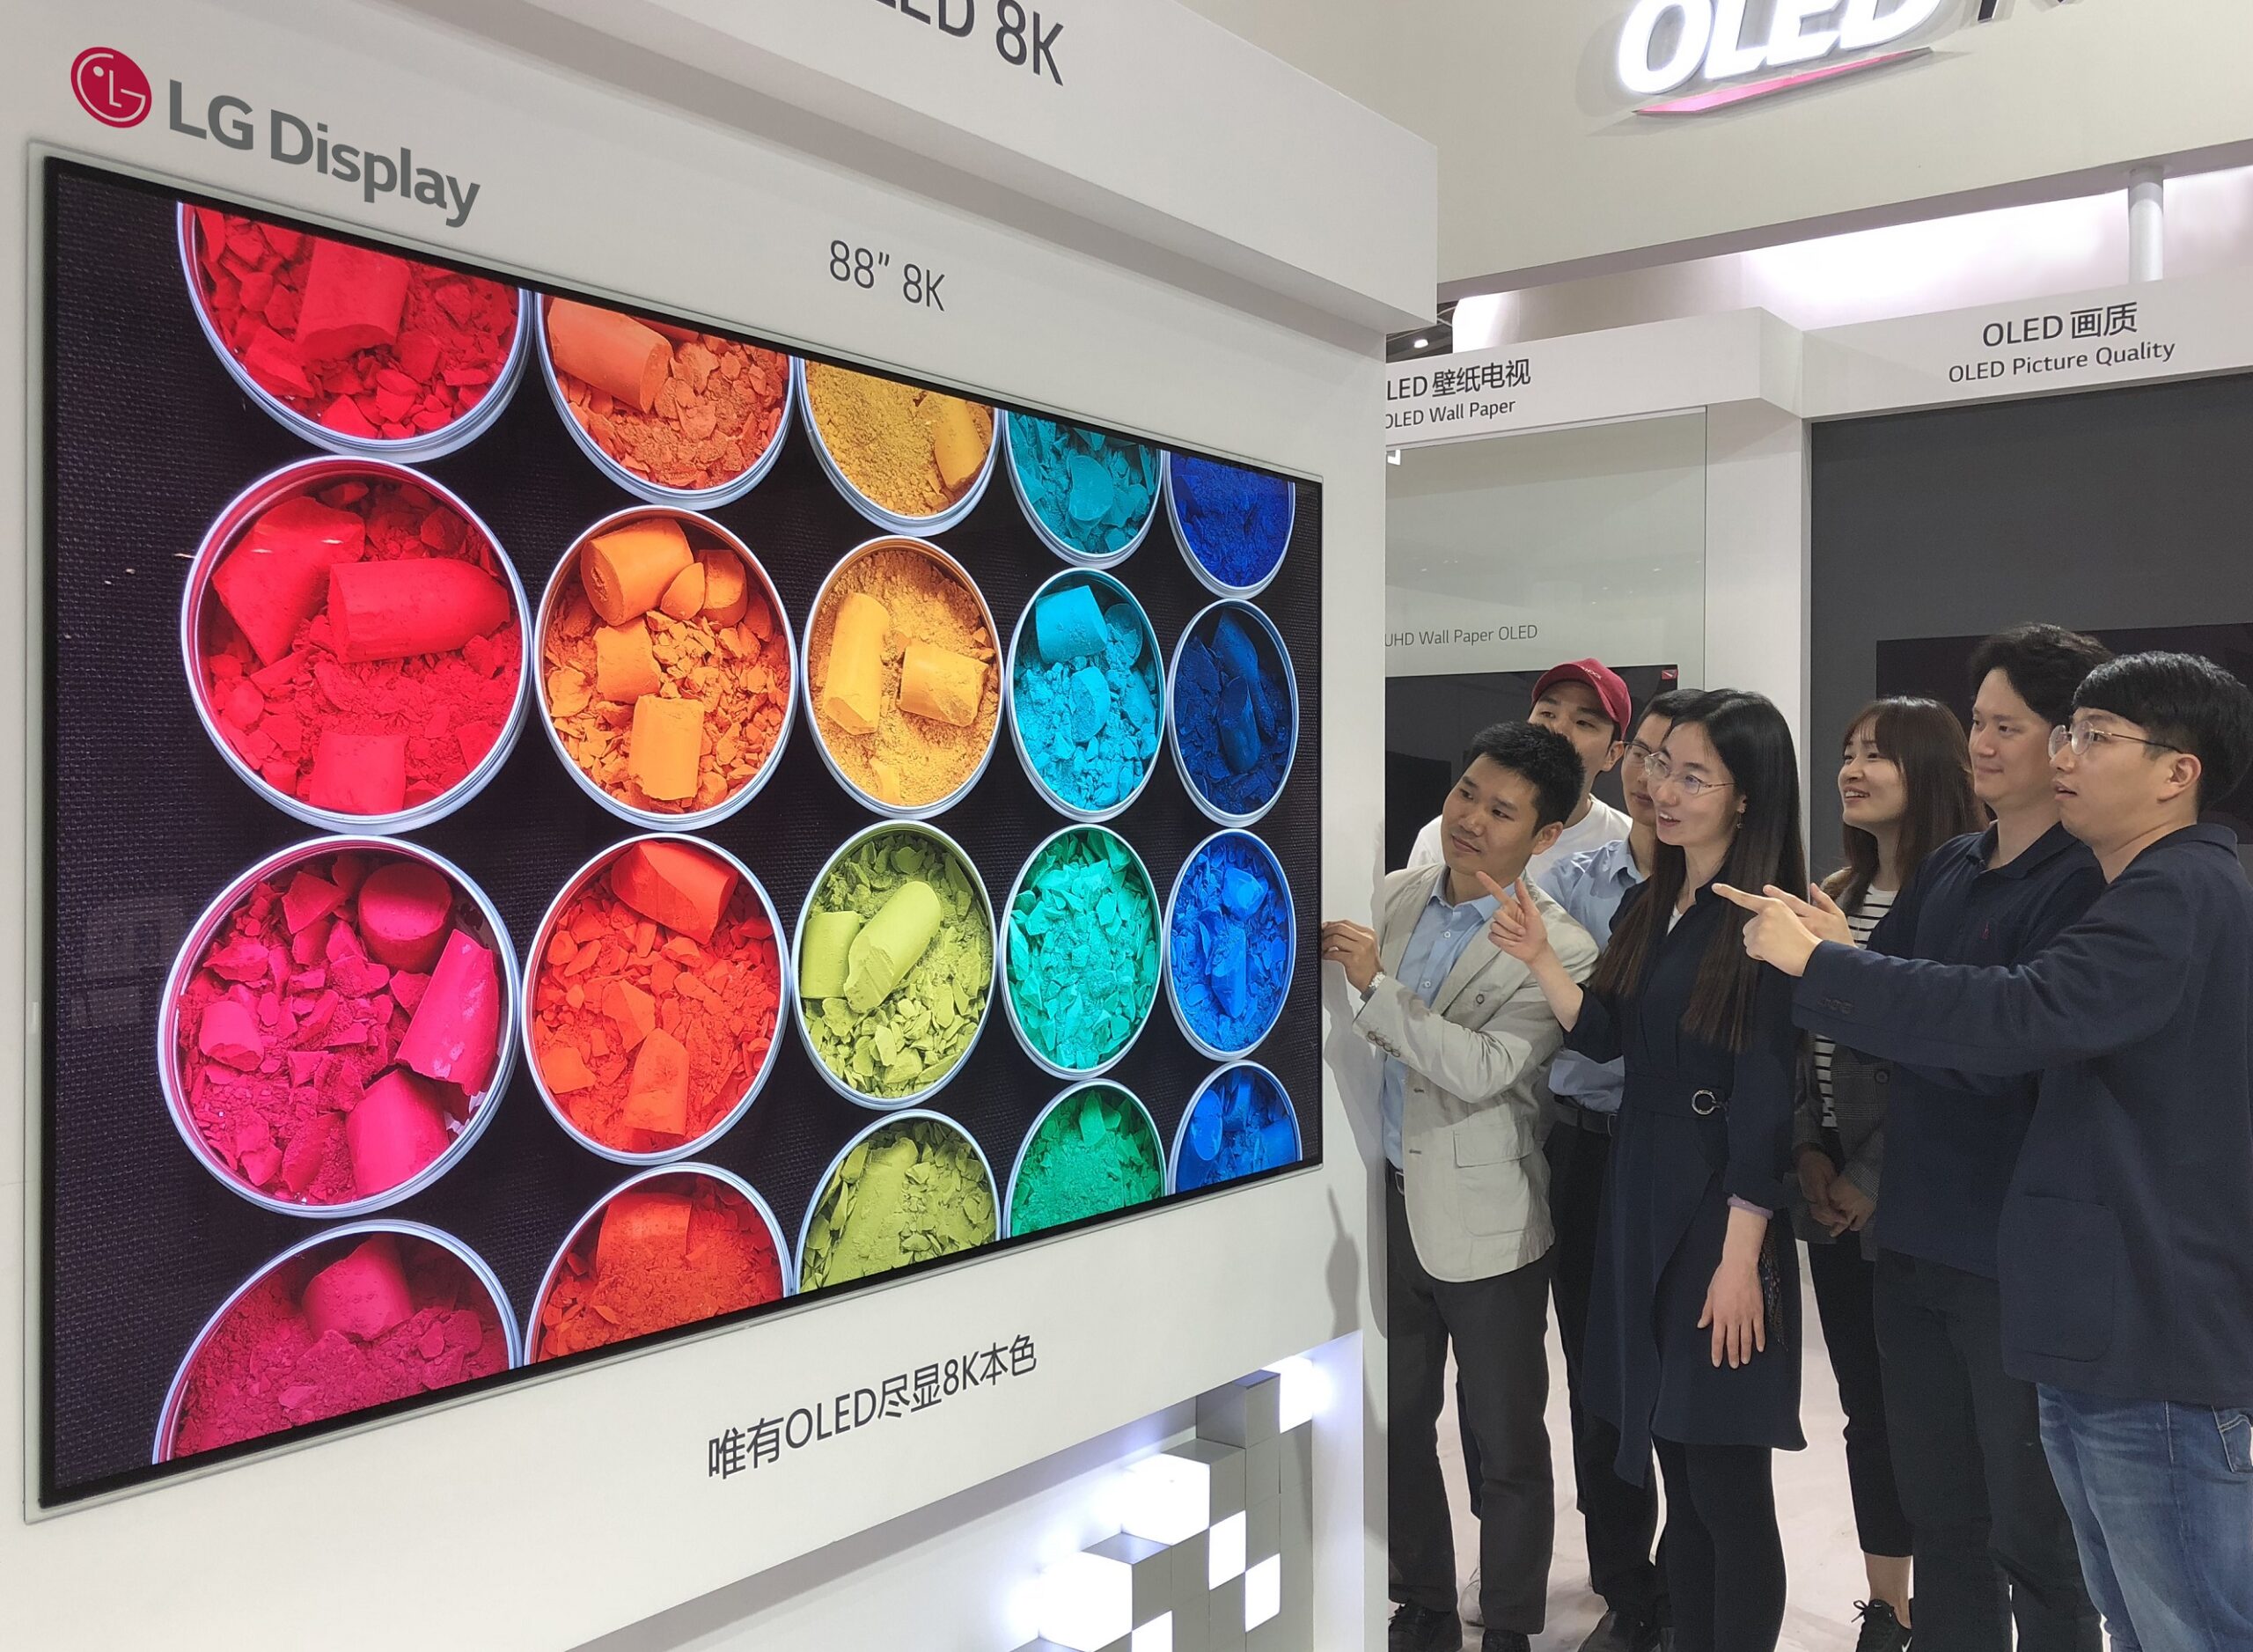 LG디스플레이가 중국 광둥성 선전에서 열린 '제 6회 중국정보기술엑스포(CITE) 2018'에 참가, CSO(Crystal Sound OLED)와 8K OLED 등 다양한 제품을 선보였다.